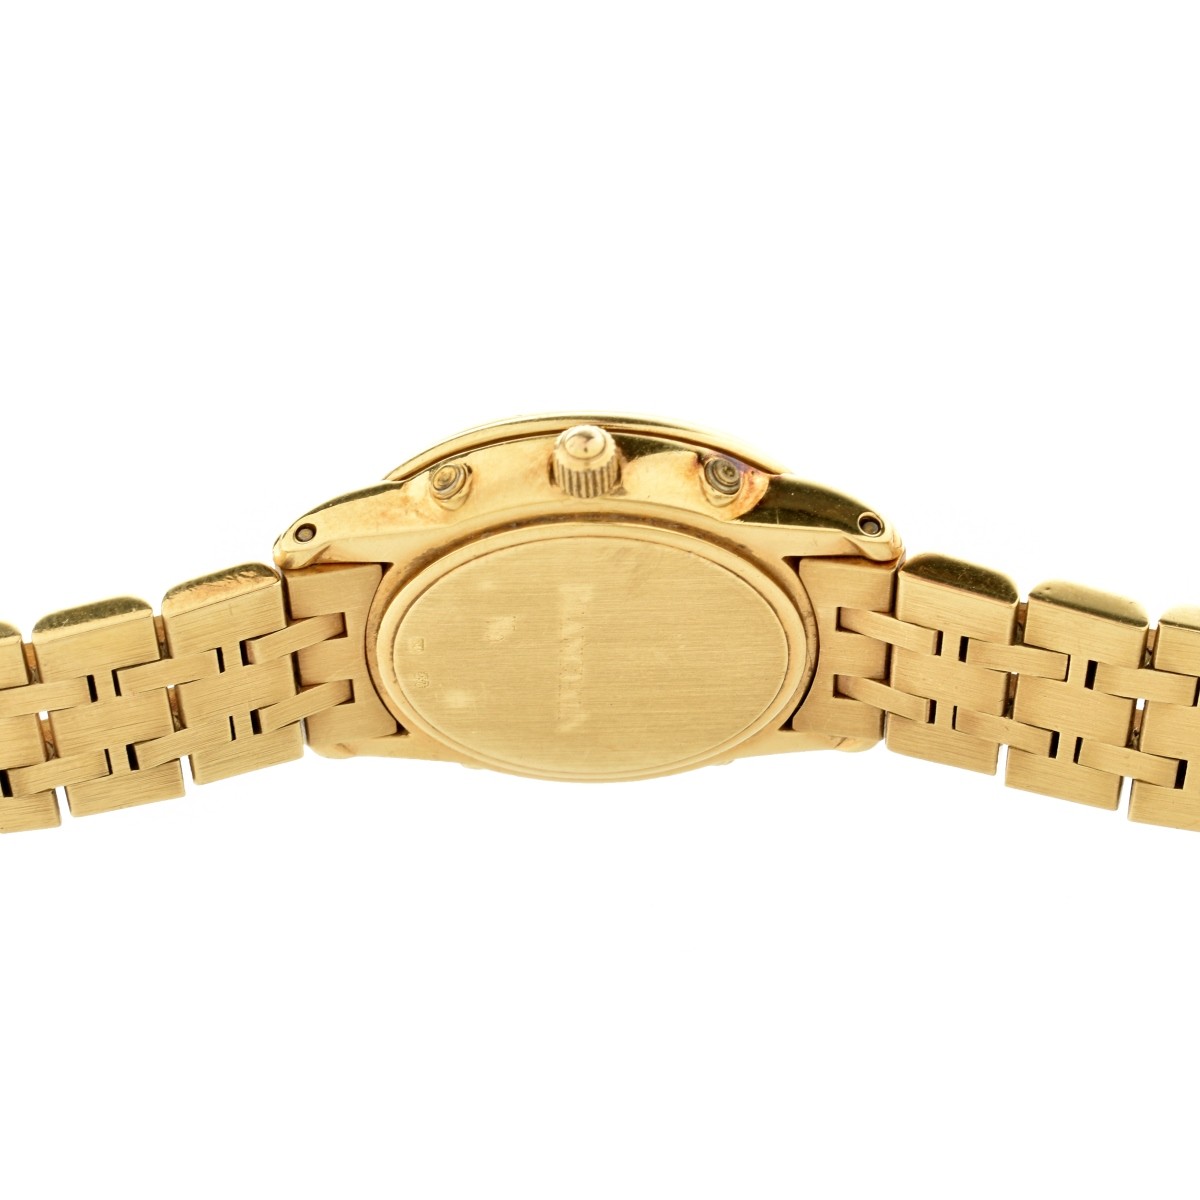 Blancpain 18K Watch